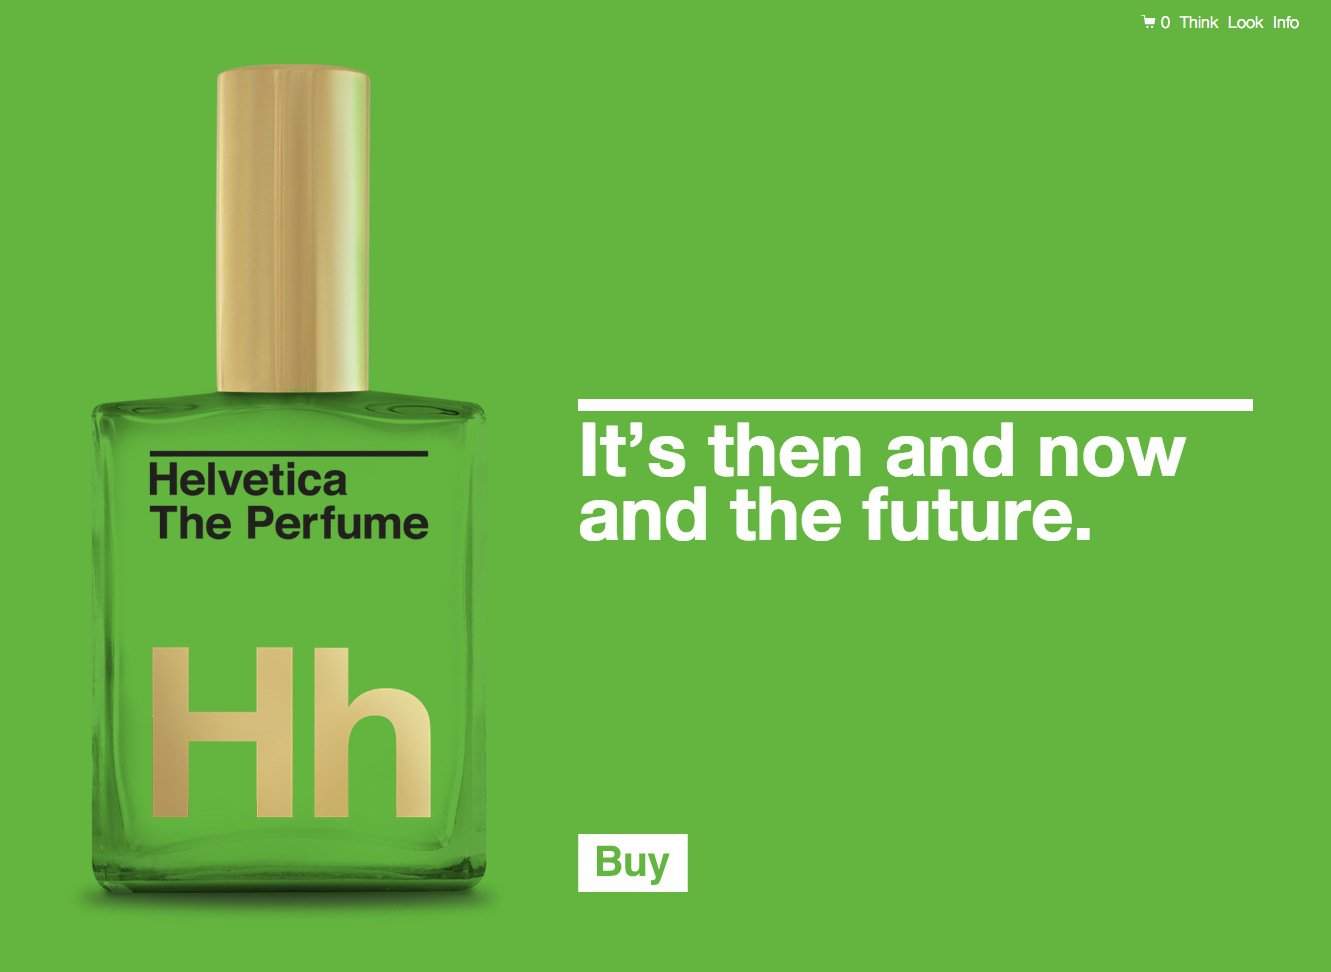 Helvetica The Perfume